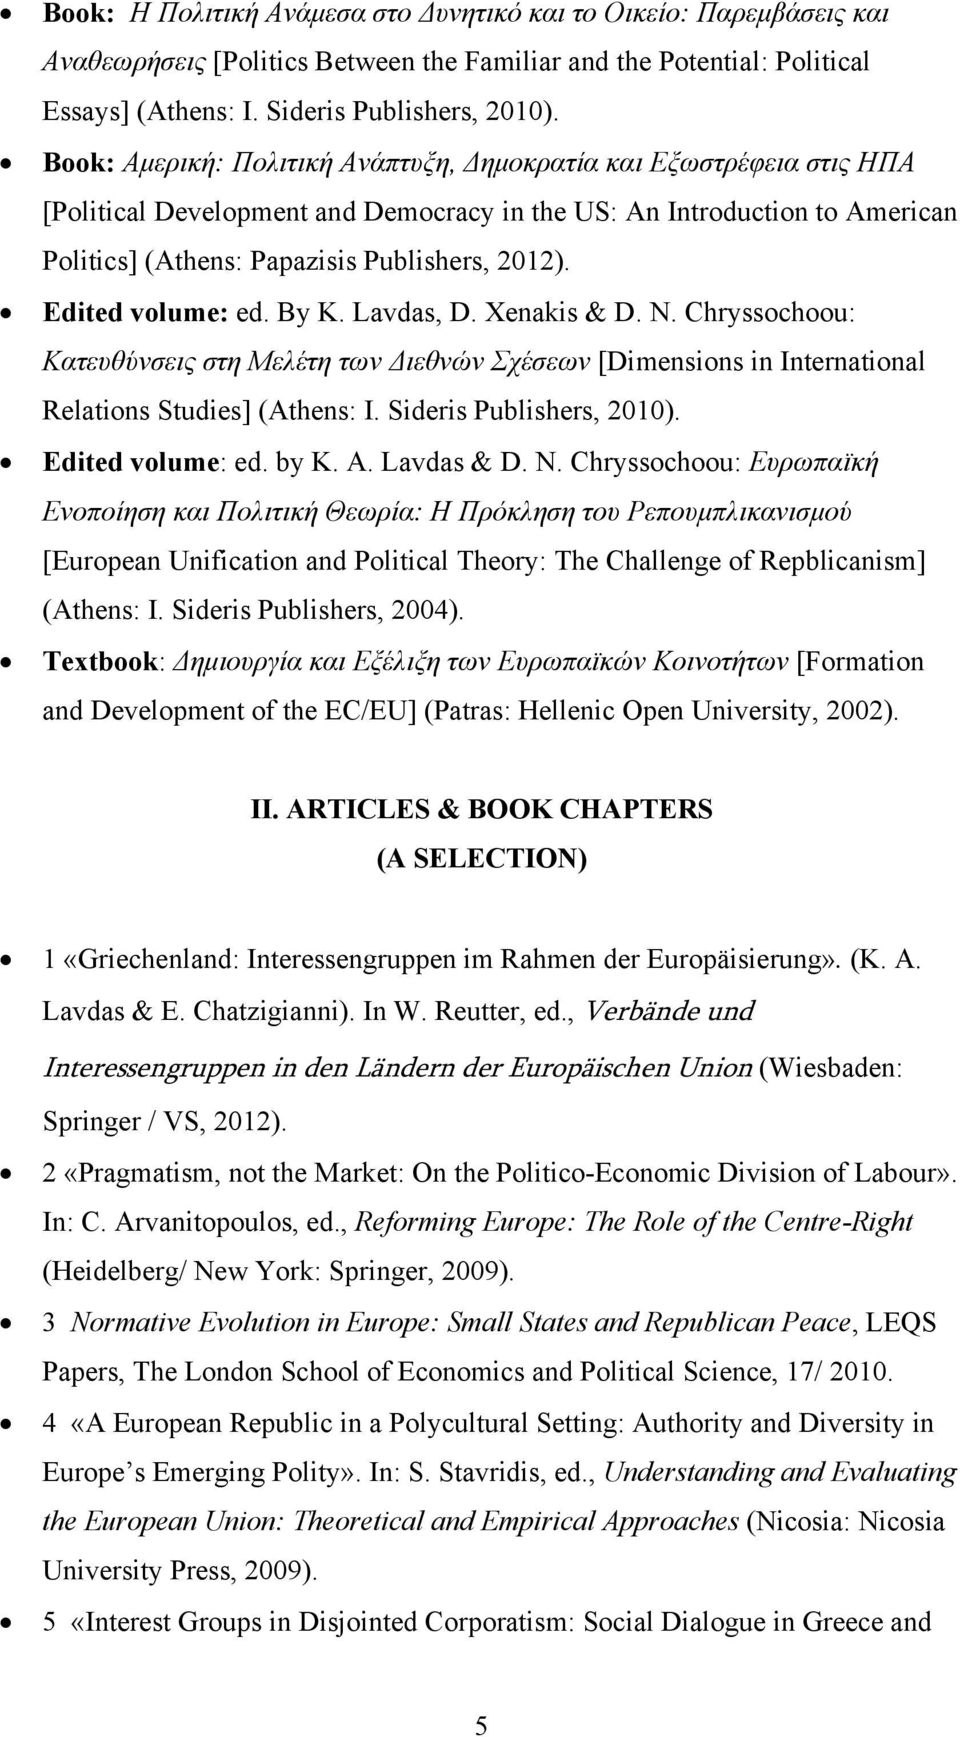 Edited volume: ed. By K. Lavdas, D. Xenakis & D. N. Chryssochoou: Κατευθύνσεις στη Μελέτη των Διεθνών Σχέσεων [Dimensions in International Relations Studies] (Athens: I. Sideris Publishers, 2010).